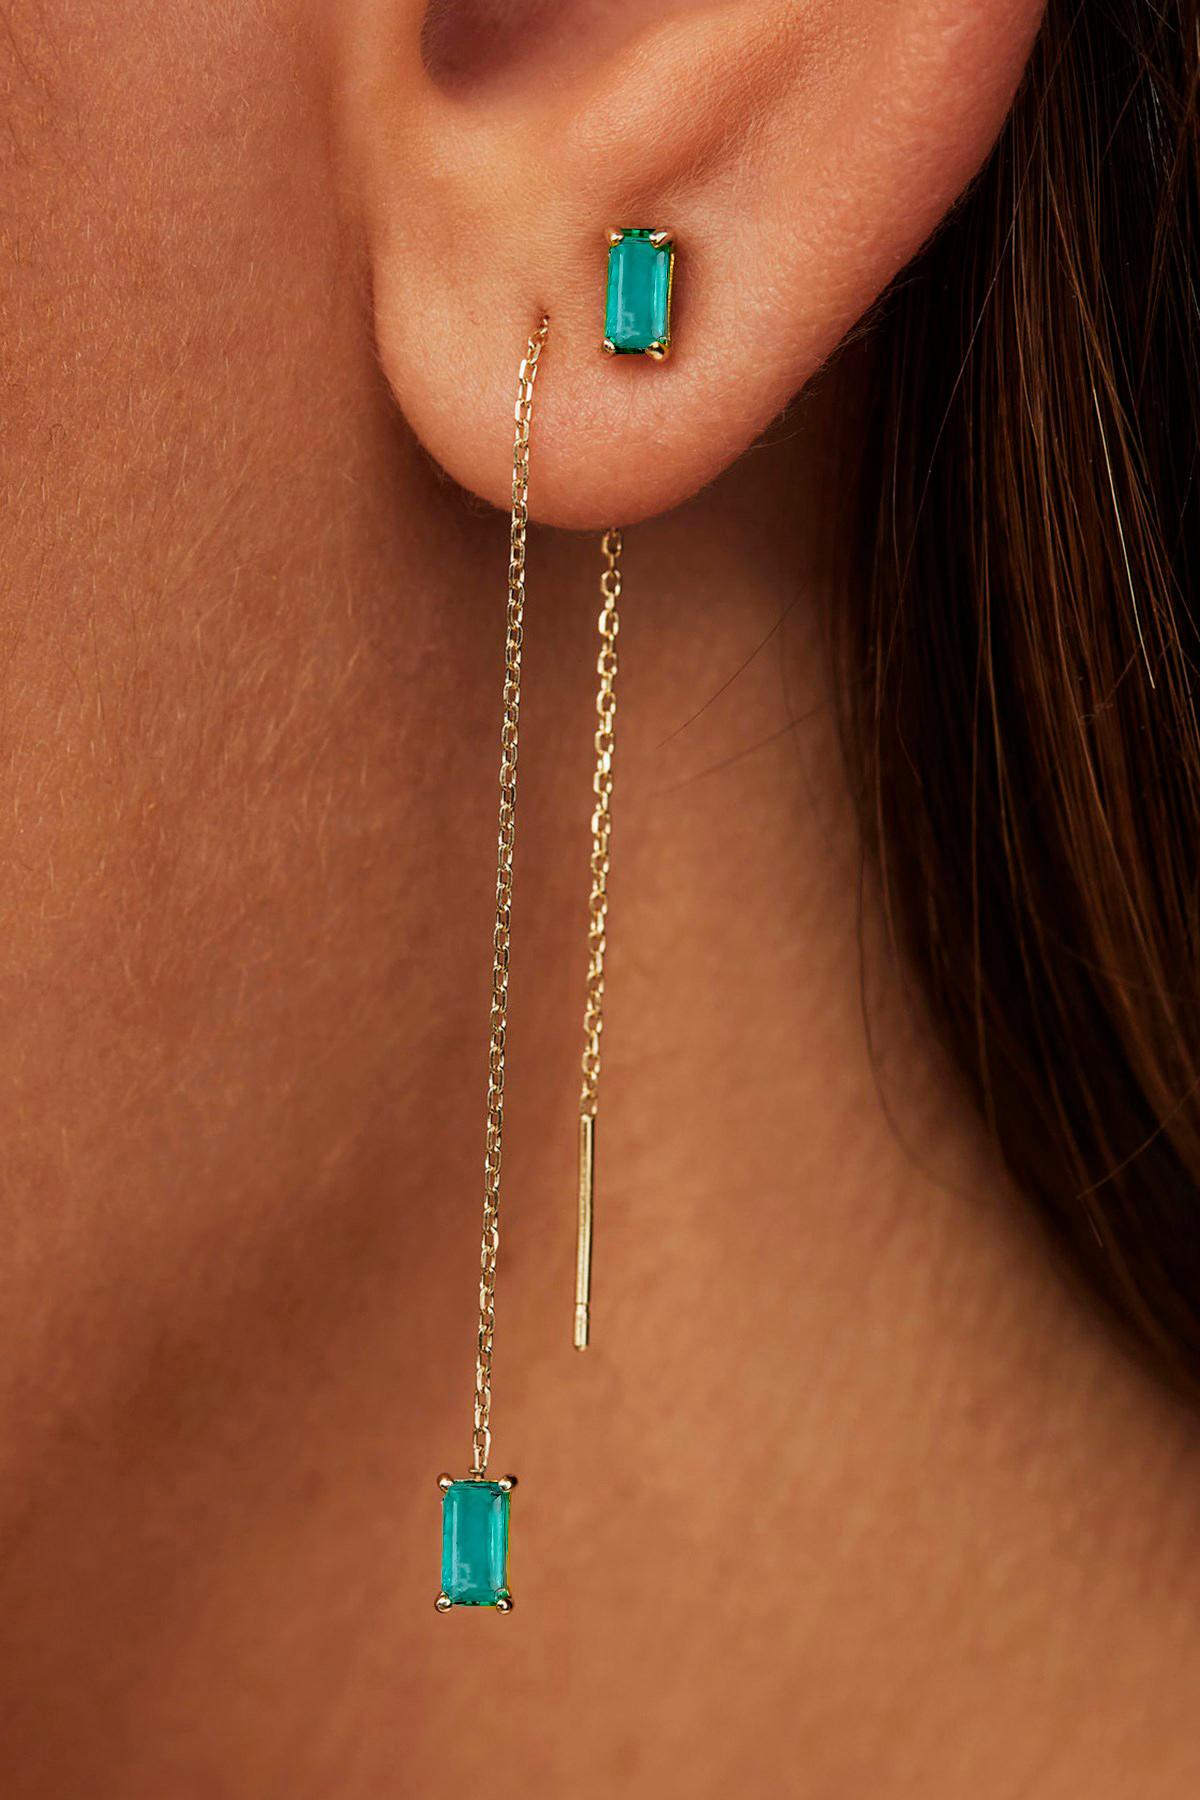 Women's 14k Solid Gold Drop Earrings with emeralds.  Chain Gold Earrings For Sale